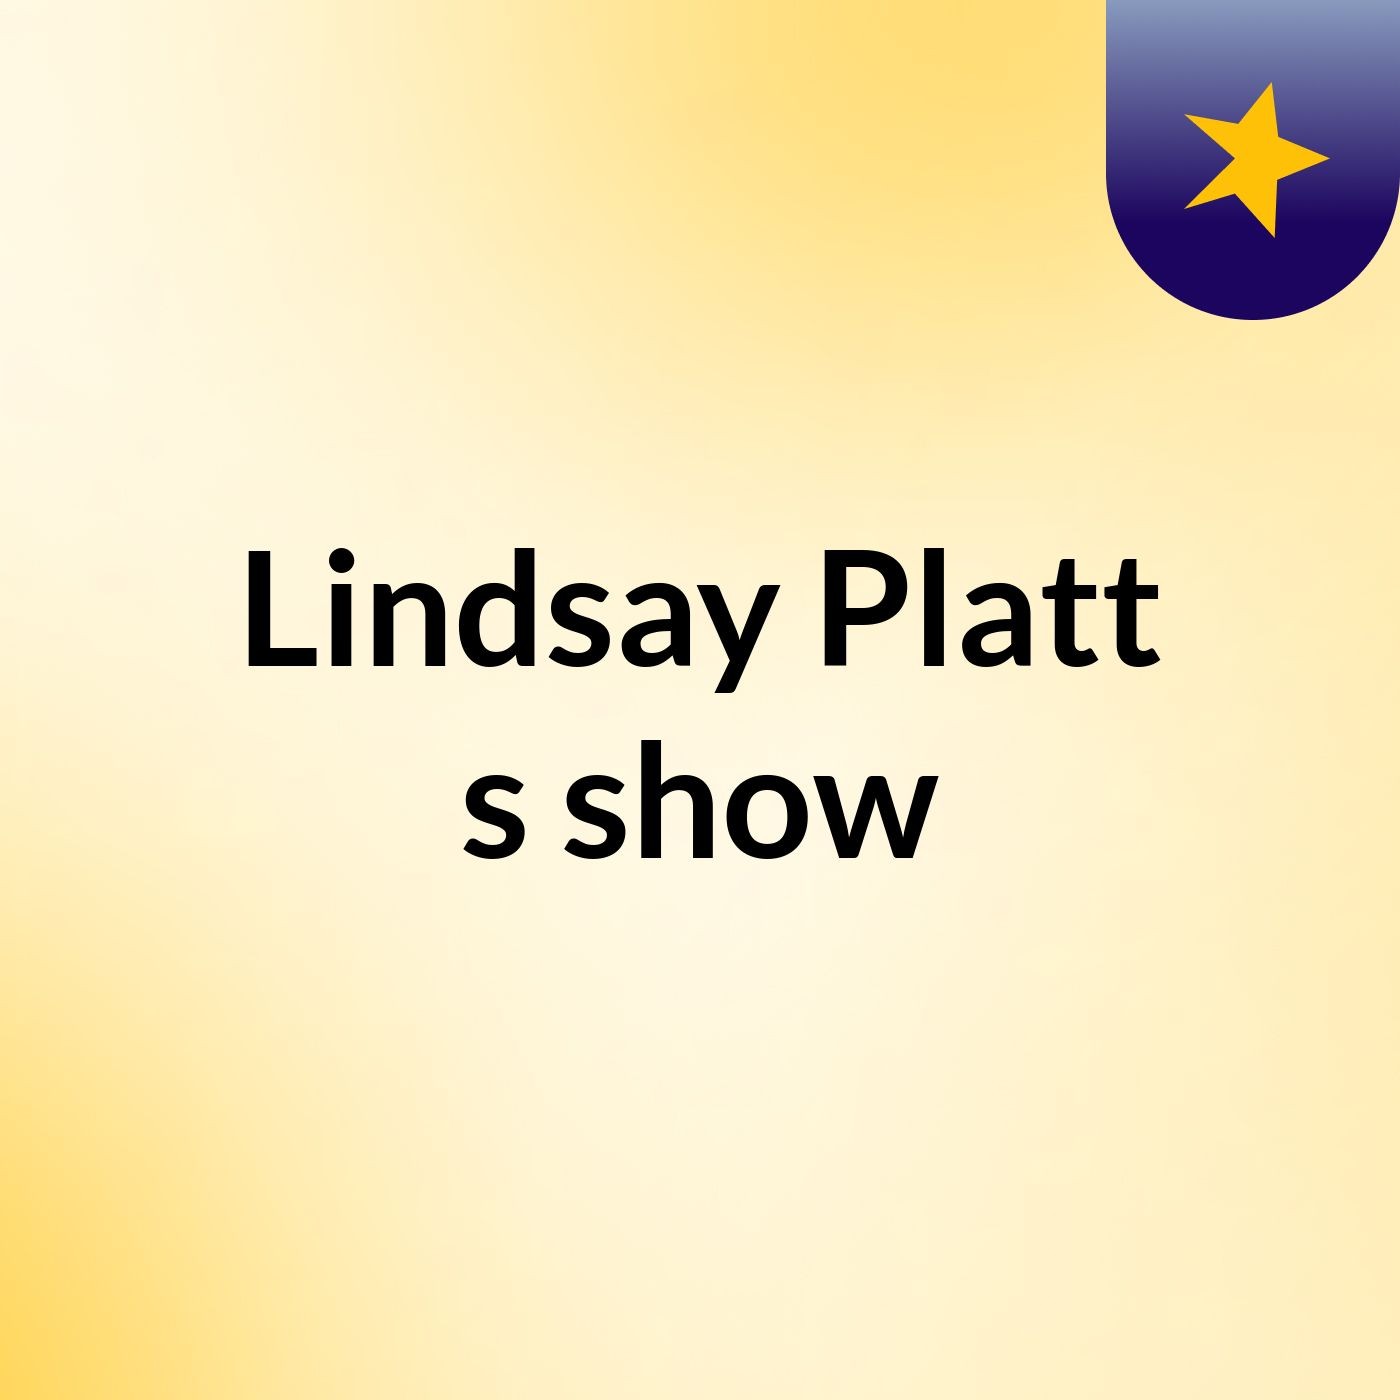 Lindsay Platt's show